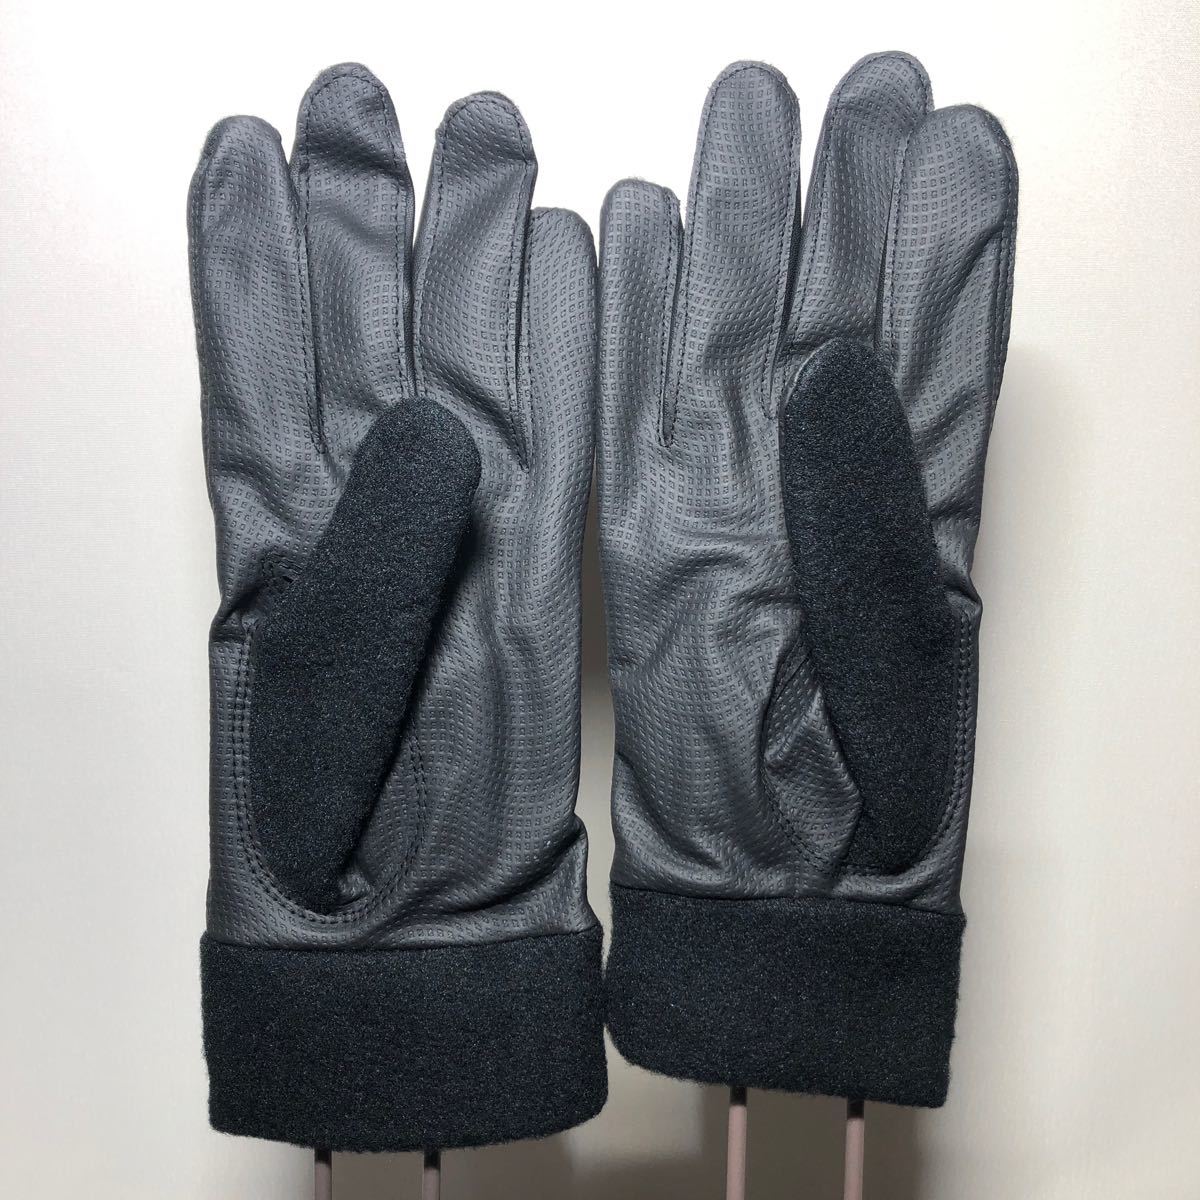 CLUNK кривошип осень-зима для обе рука для Golf перчатка M размер 21~22cm черный winter теплый перчатка 